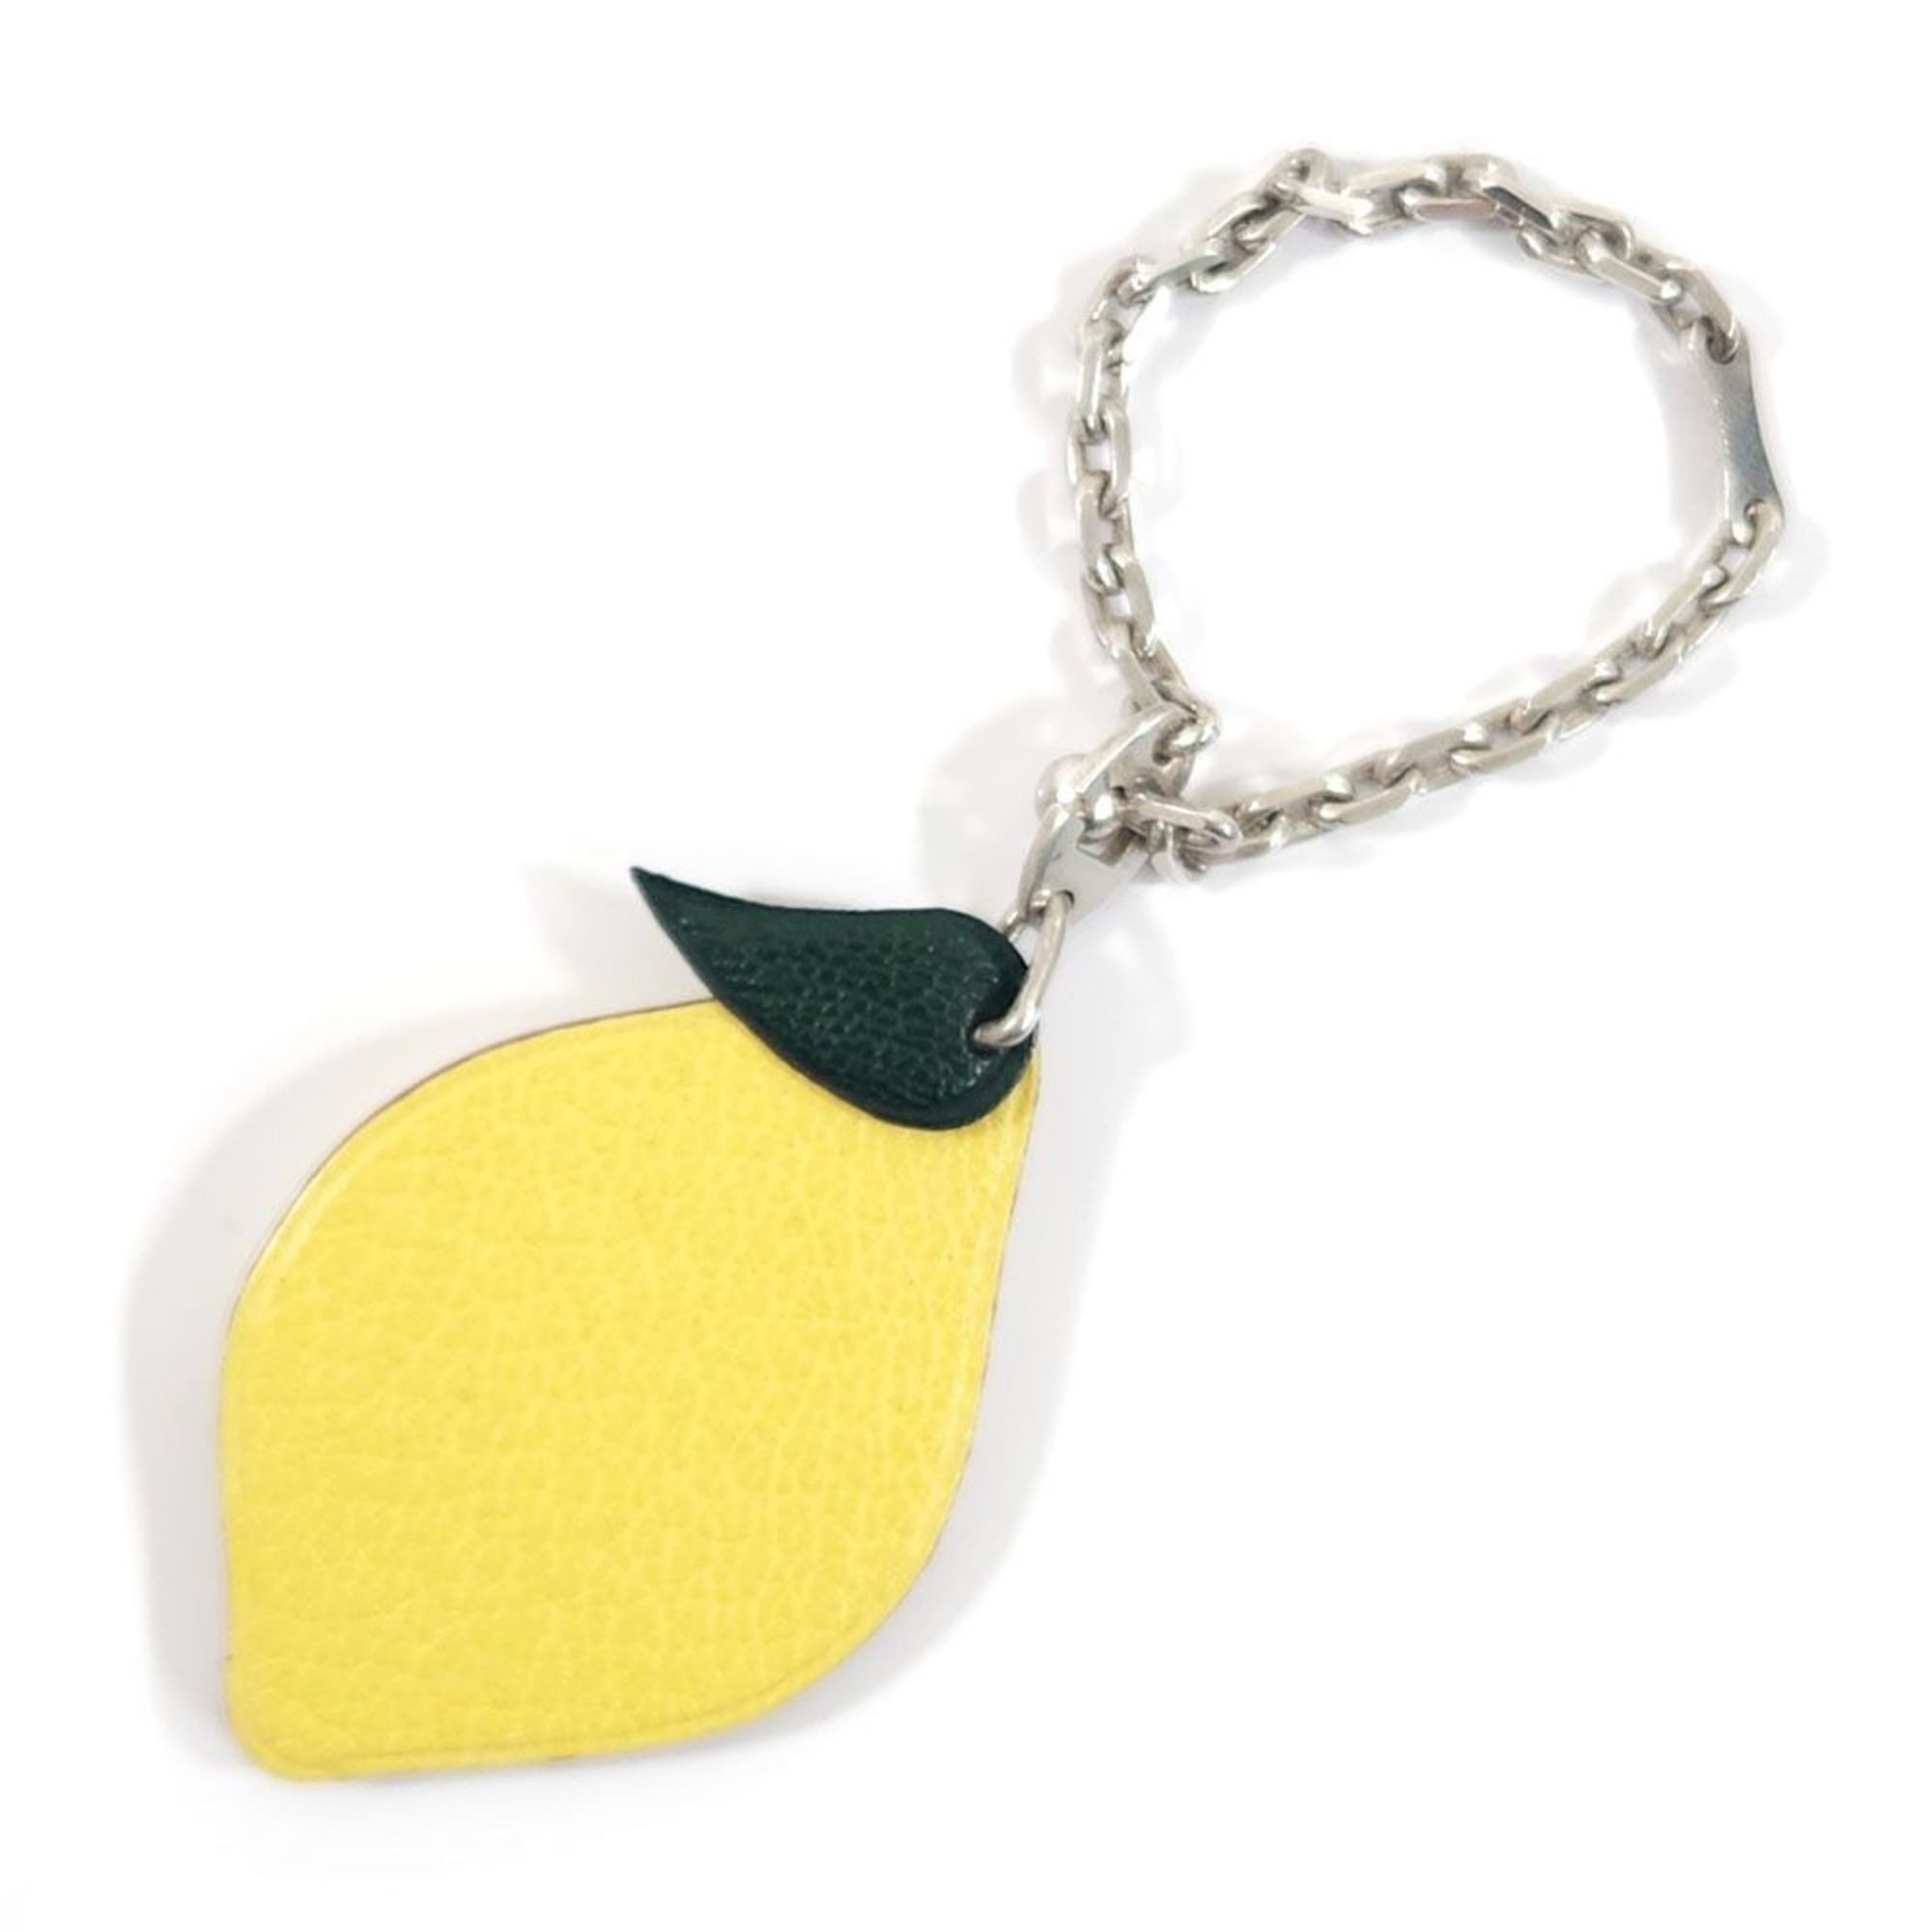 Hermes HERMES Bag Charm Fruit Keychain Lemon Yellow Green Leather Metal